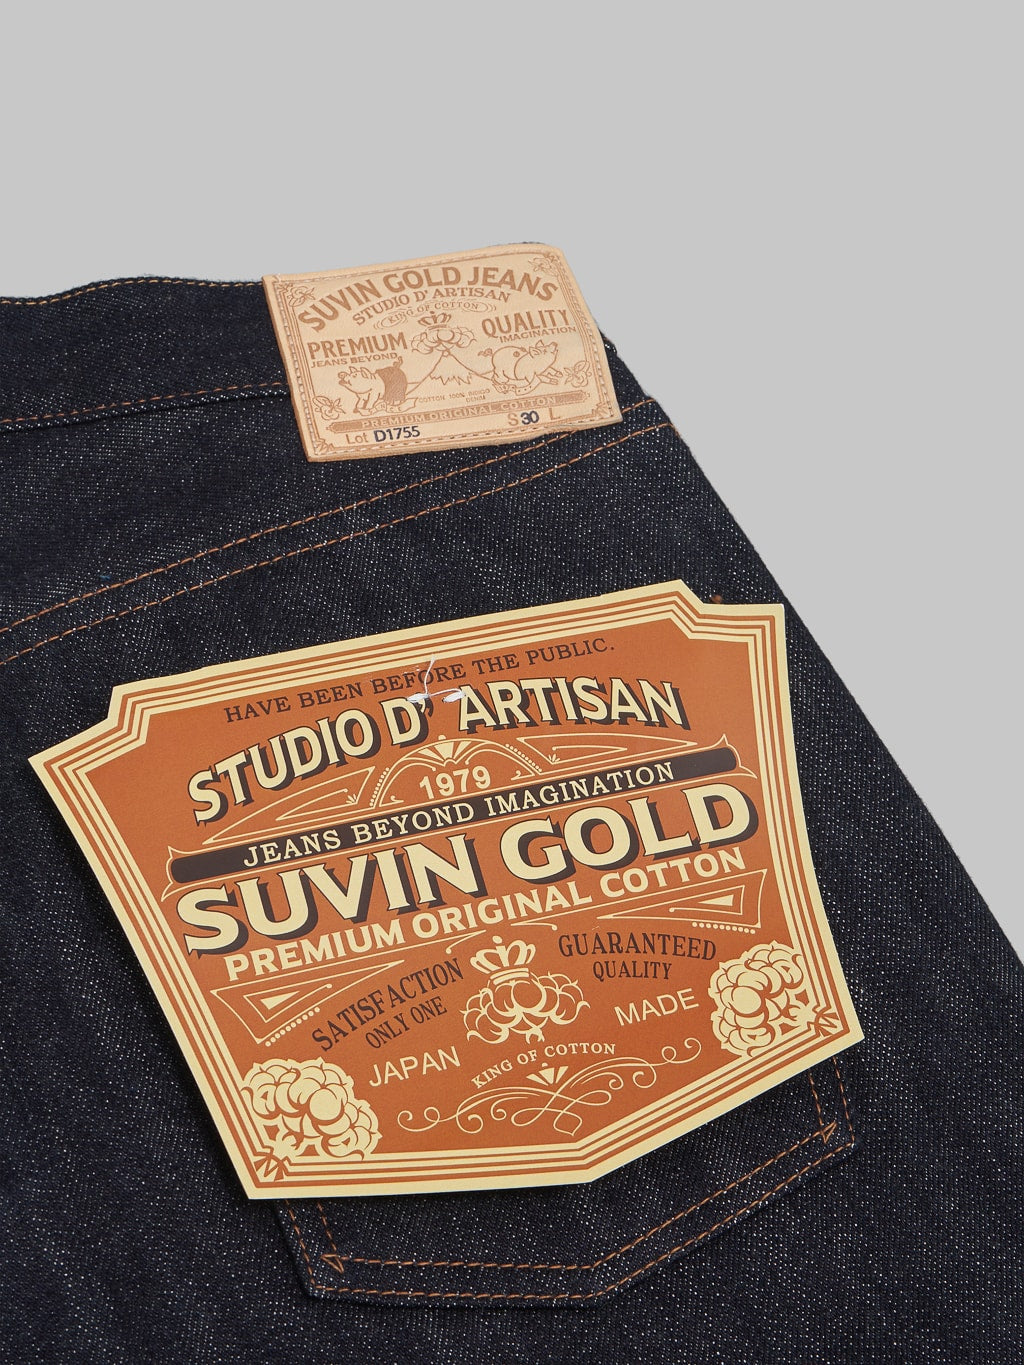 Studio DArtisan Suvin Gold D1755 Regular Straight Narrow Jeans pocket flasher